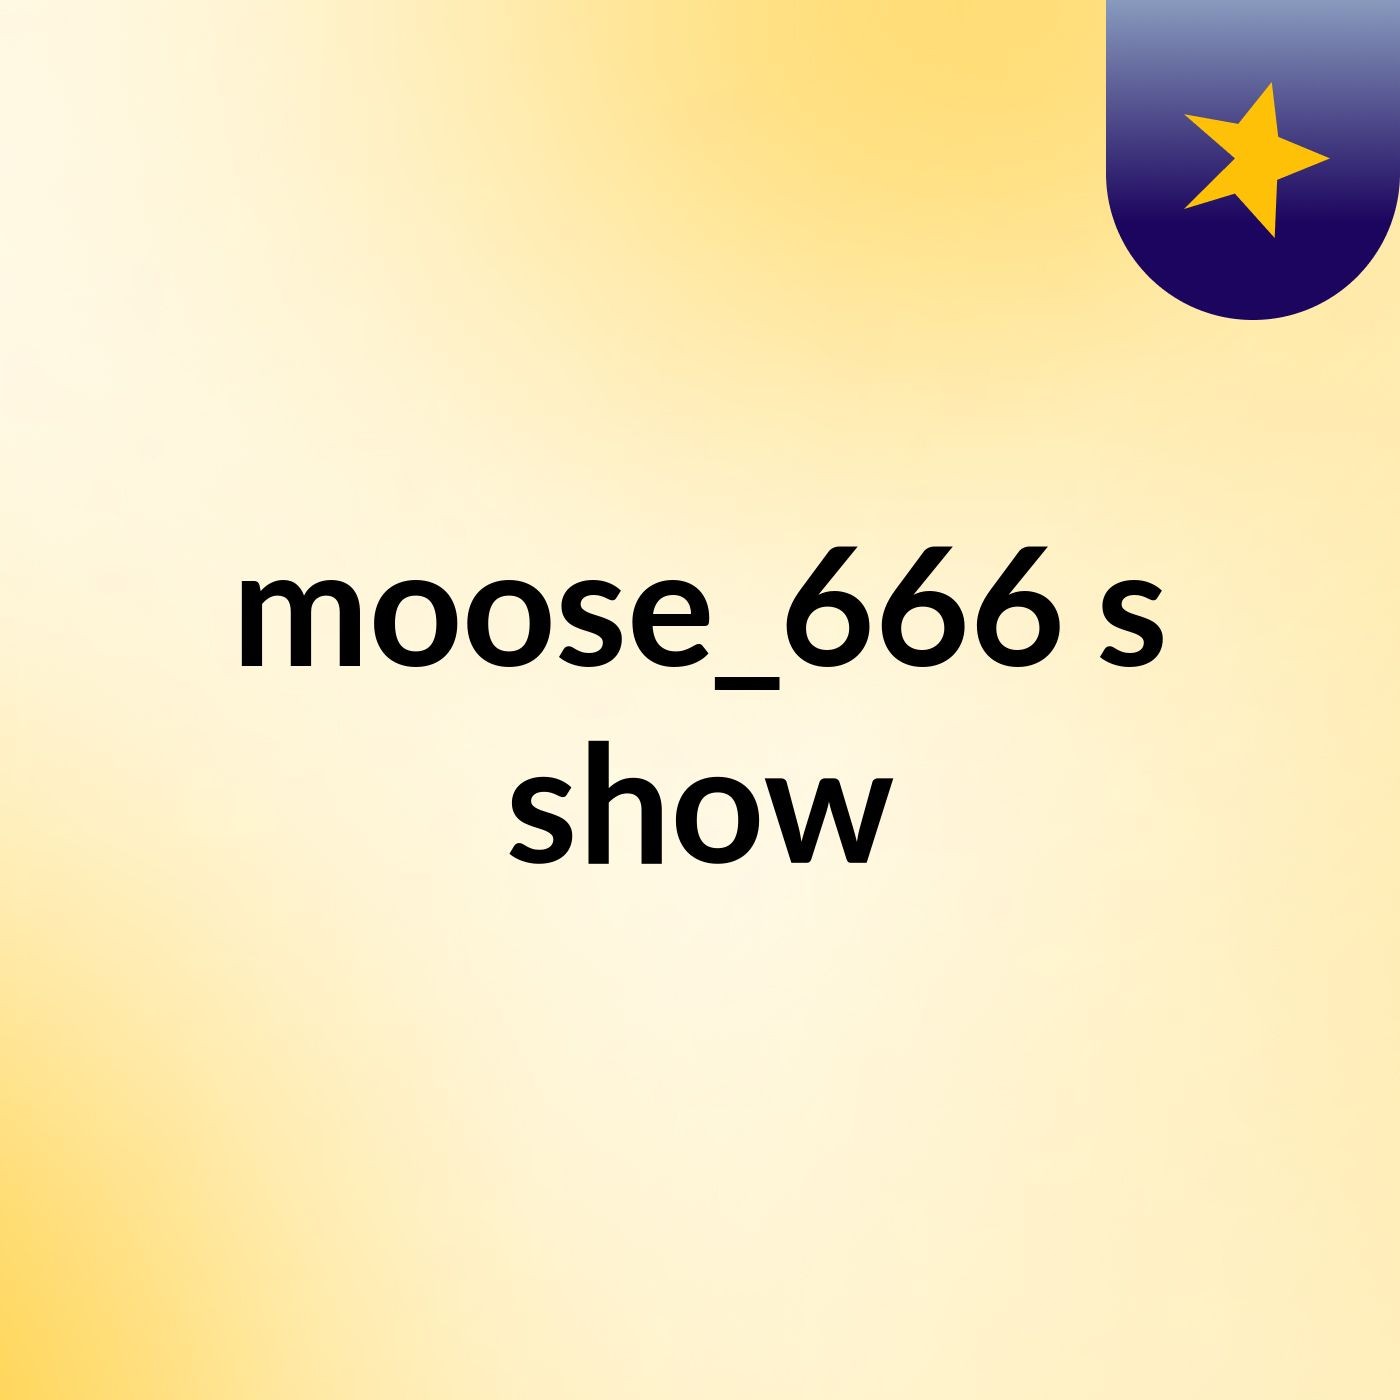 moose_666's show